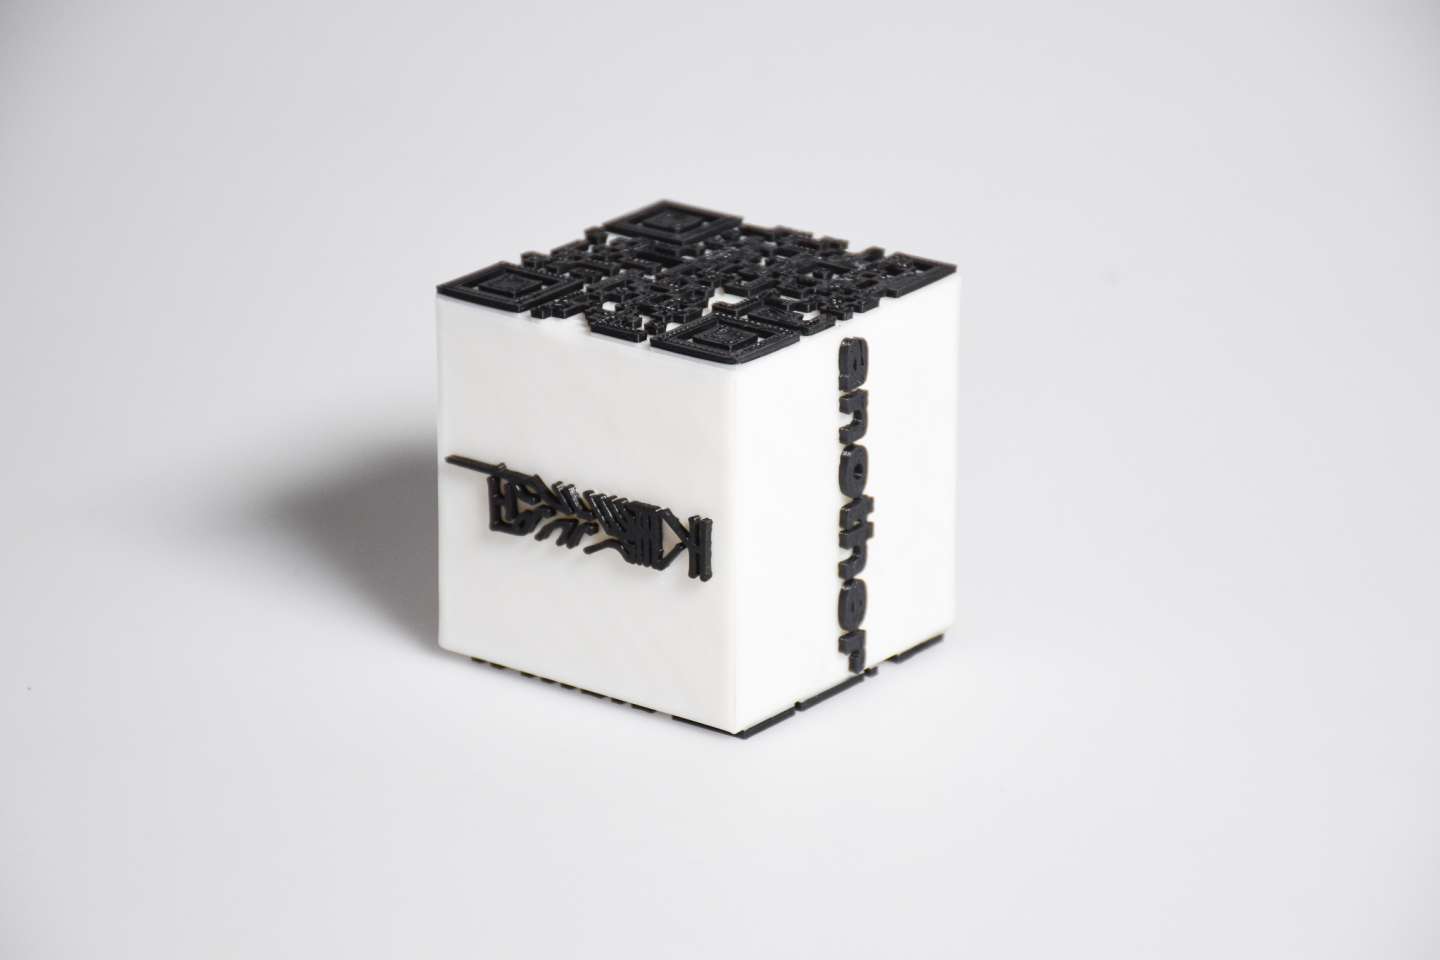 Portfolio Cube : Another